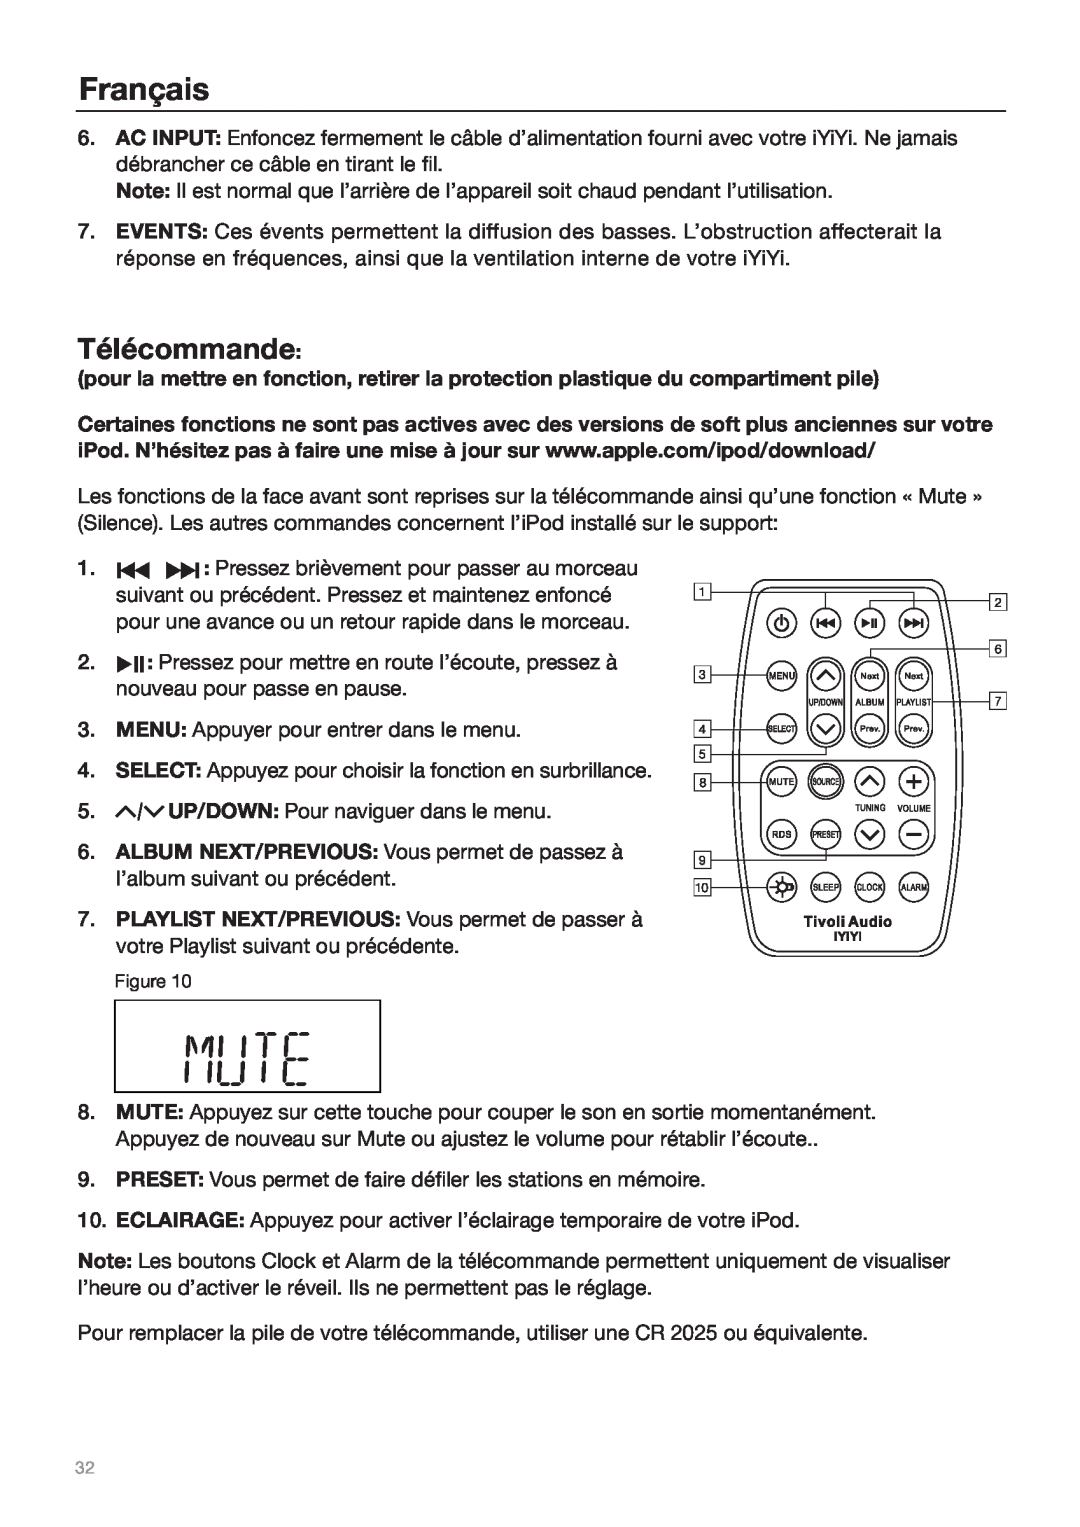 Tivoli Audio Sound System owner manual Télécommande, Français 